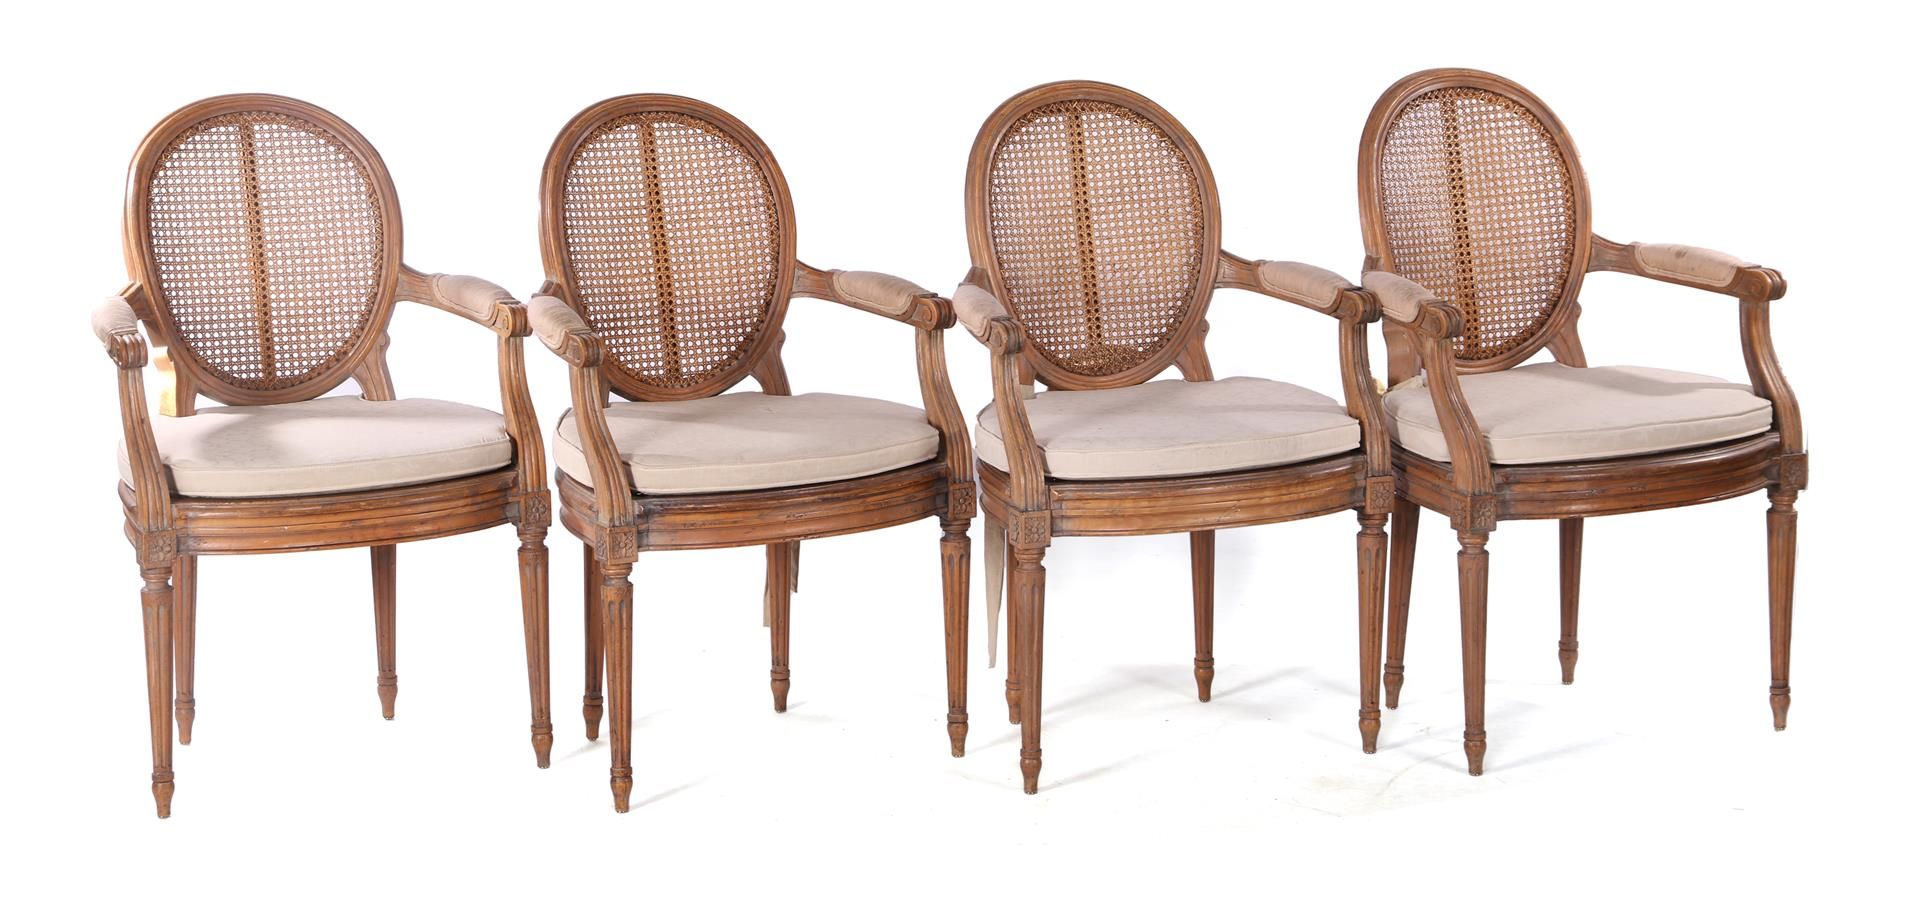 4 walnut armchairs in Louis XVI style